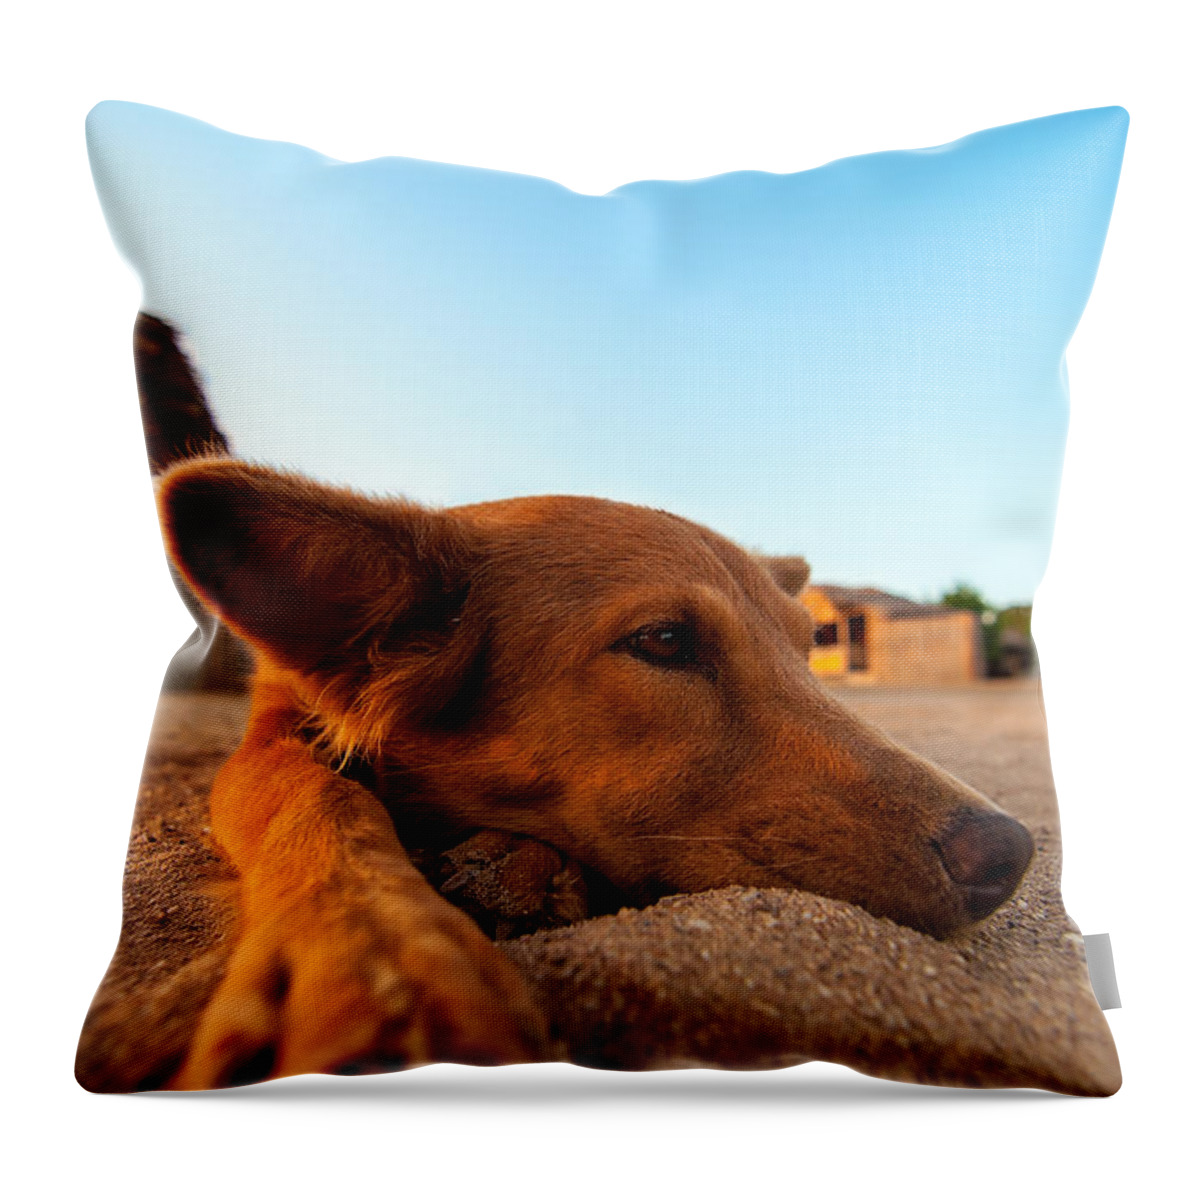 Beach Throw Pillow featuring the photograph Dog Relaxing on a Beach by Jess Kraft